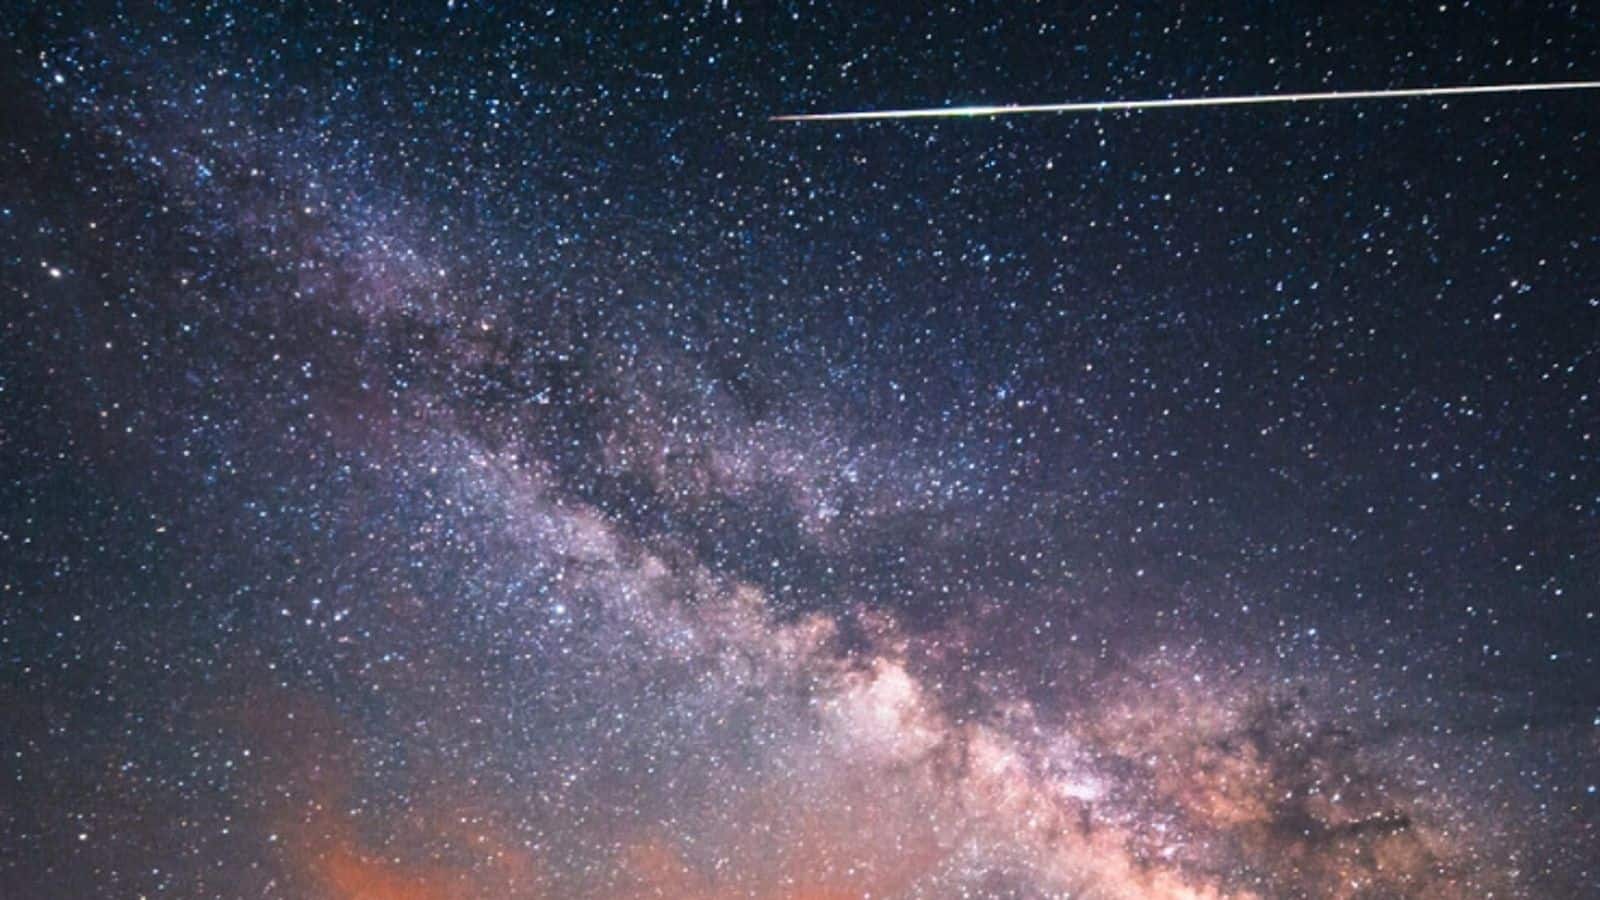 Eta Aquariid meteor shower peaks this weekend, century's strongest anticipated